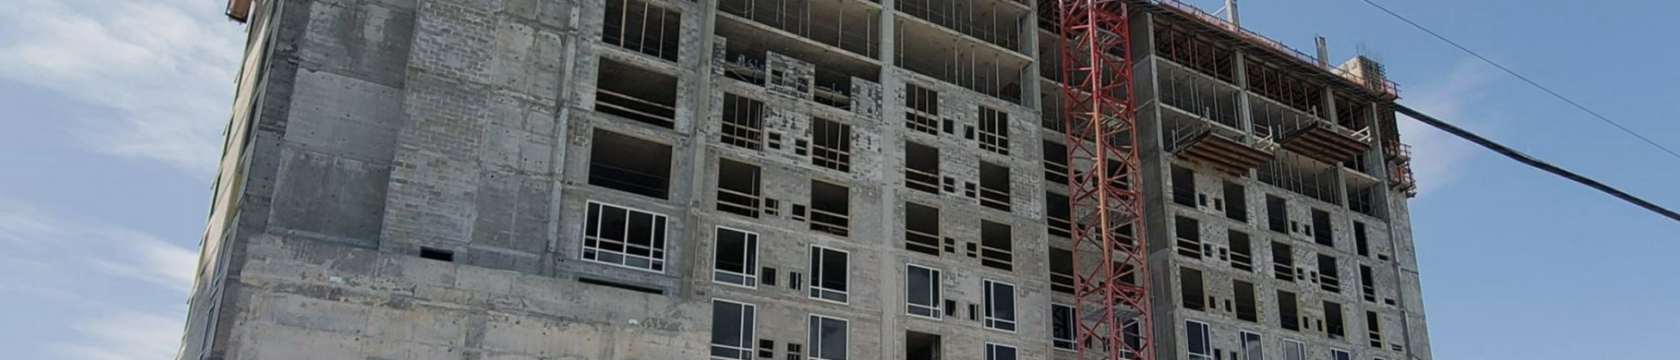 Hotel Construction Lending Starts Comeback After Pandemic